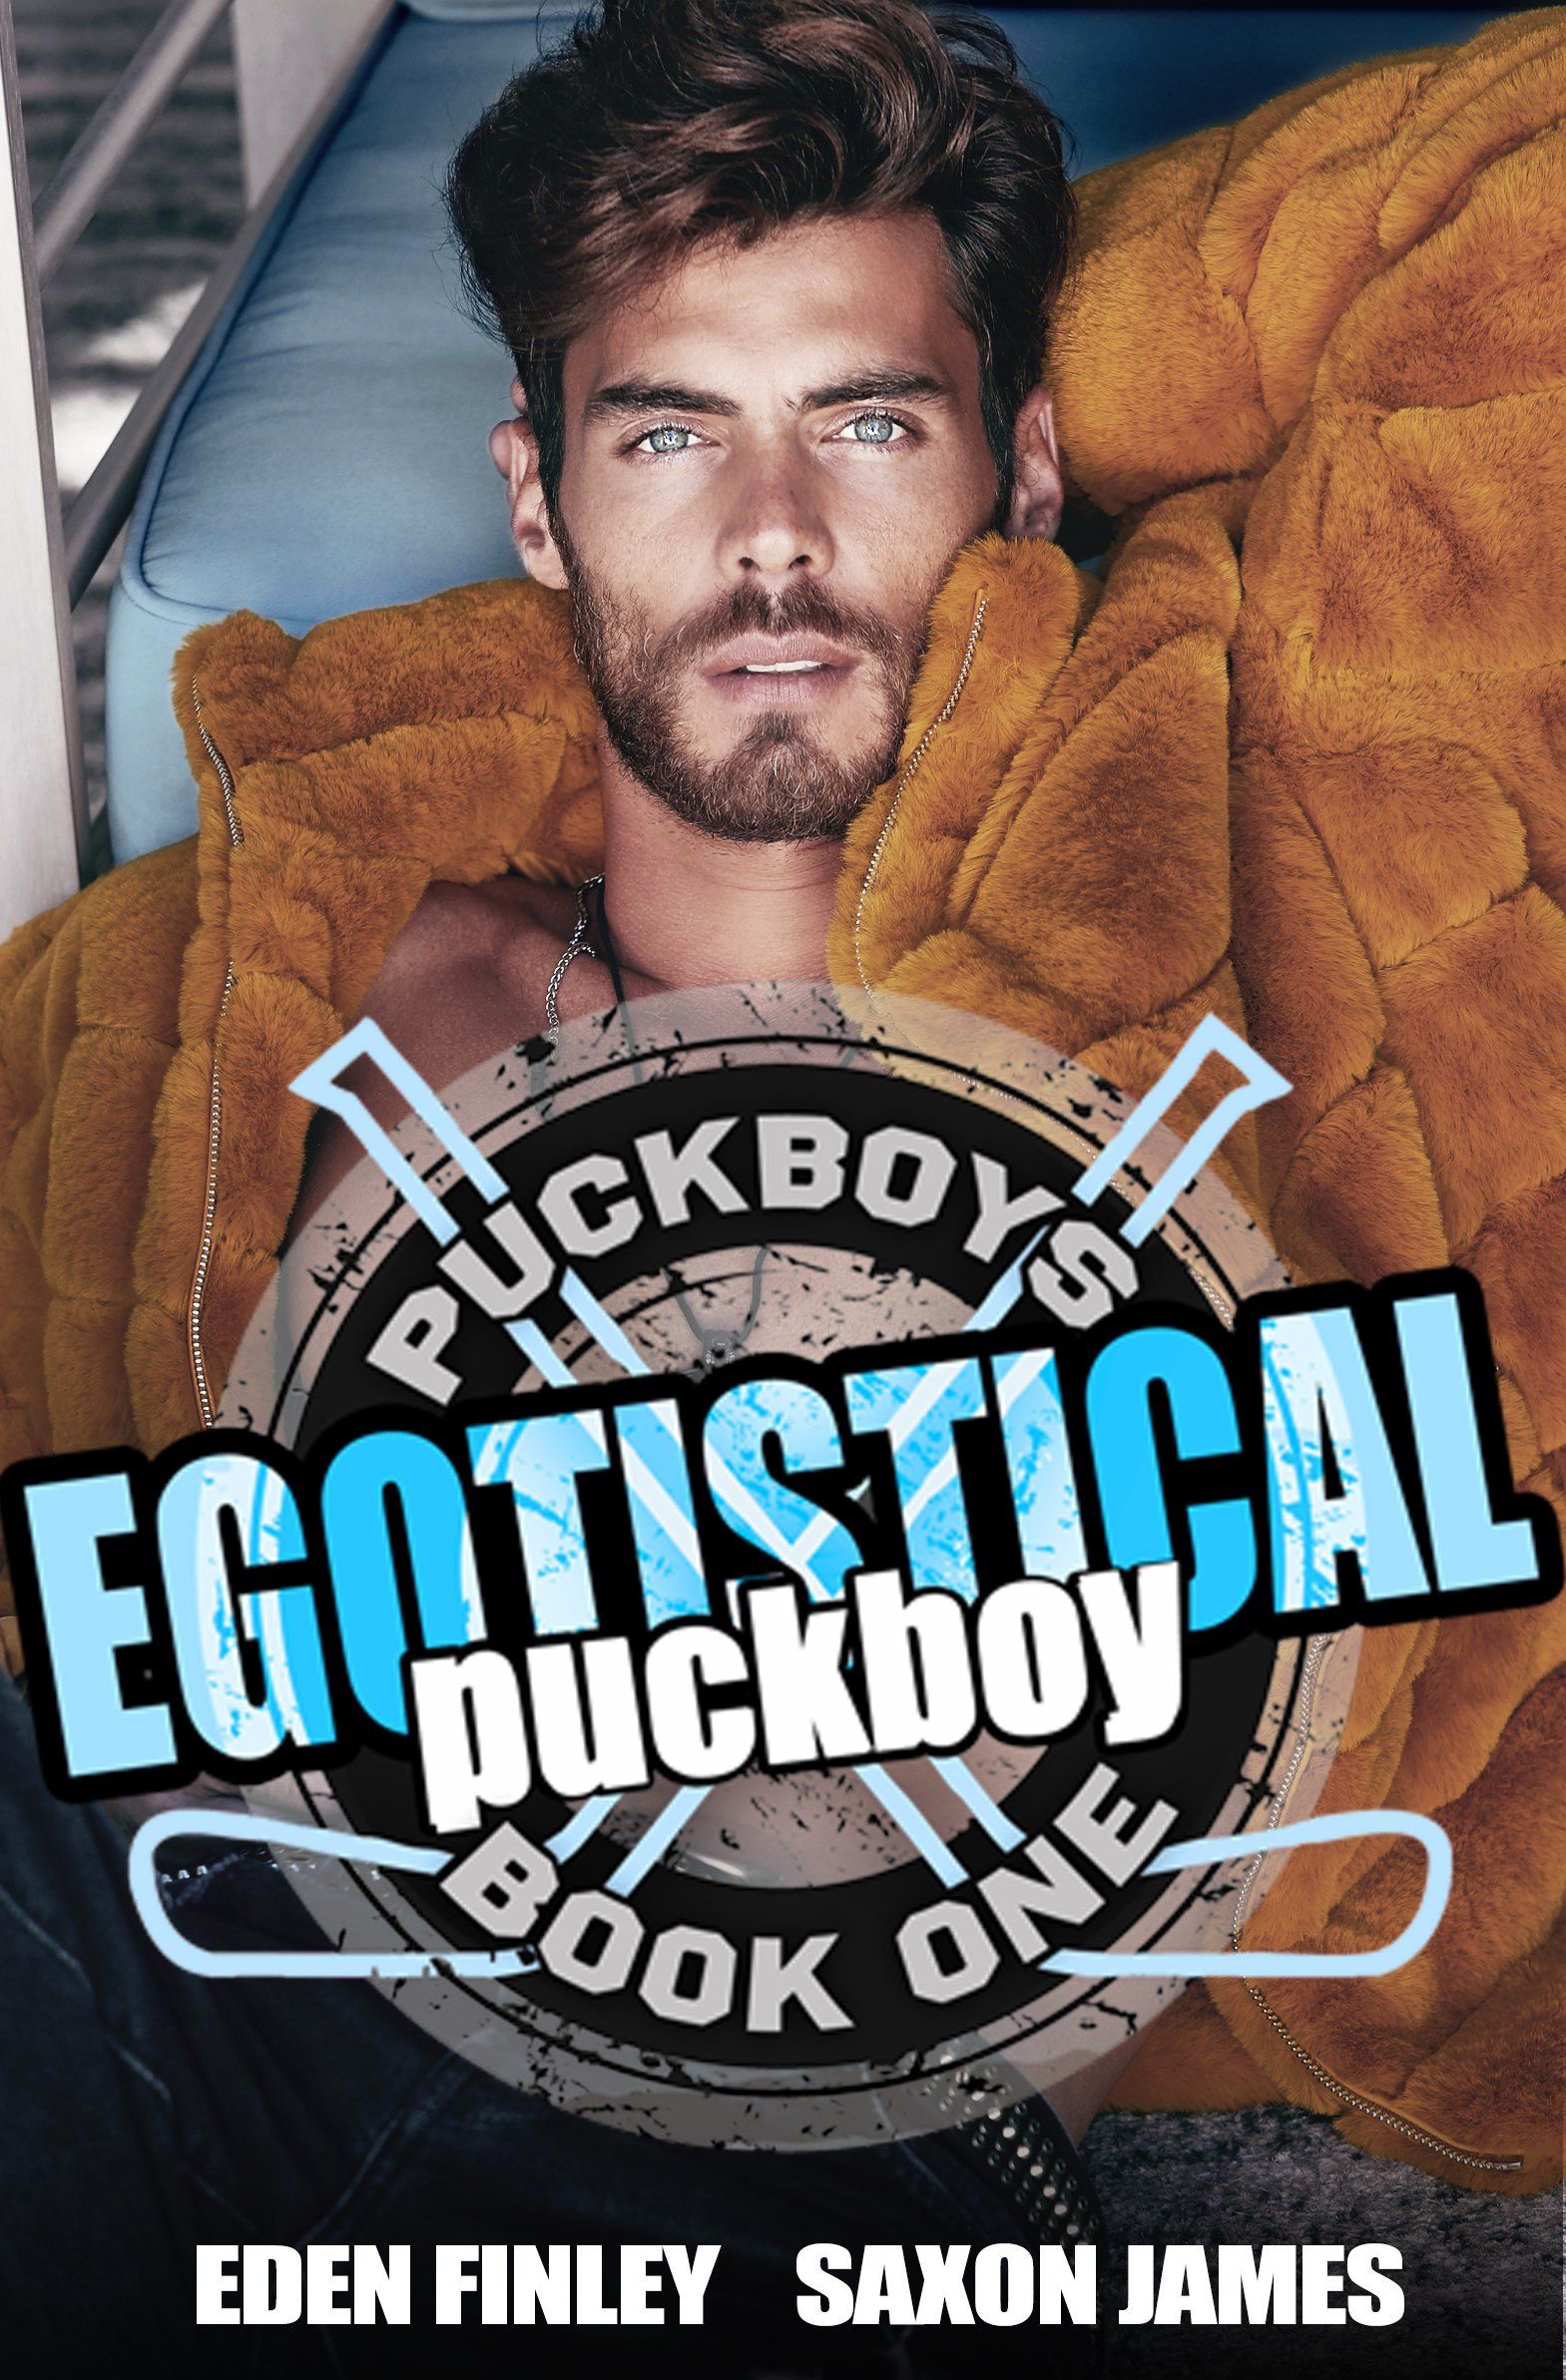 Egotistical puckboy book one by eden finley and saxon james